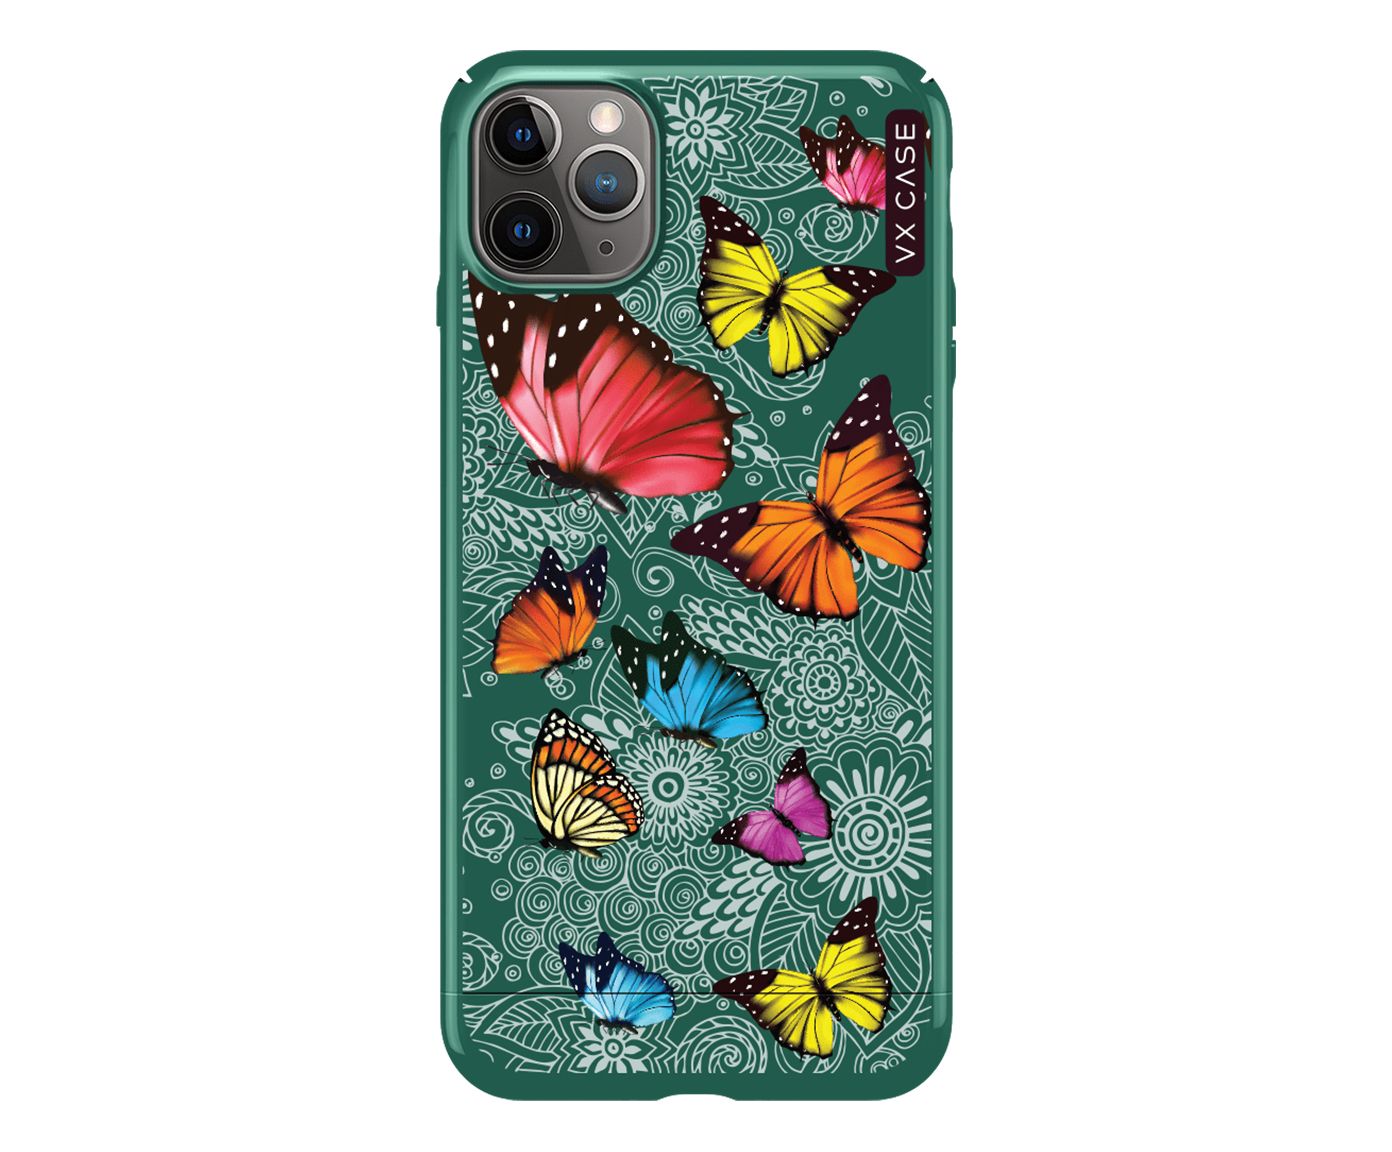 Capa Envernizada Vx Case Iphone 11 Pro Butterfly Garden | Westwing.com.br